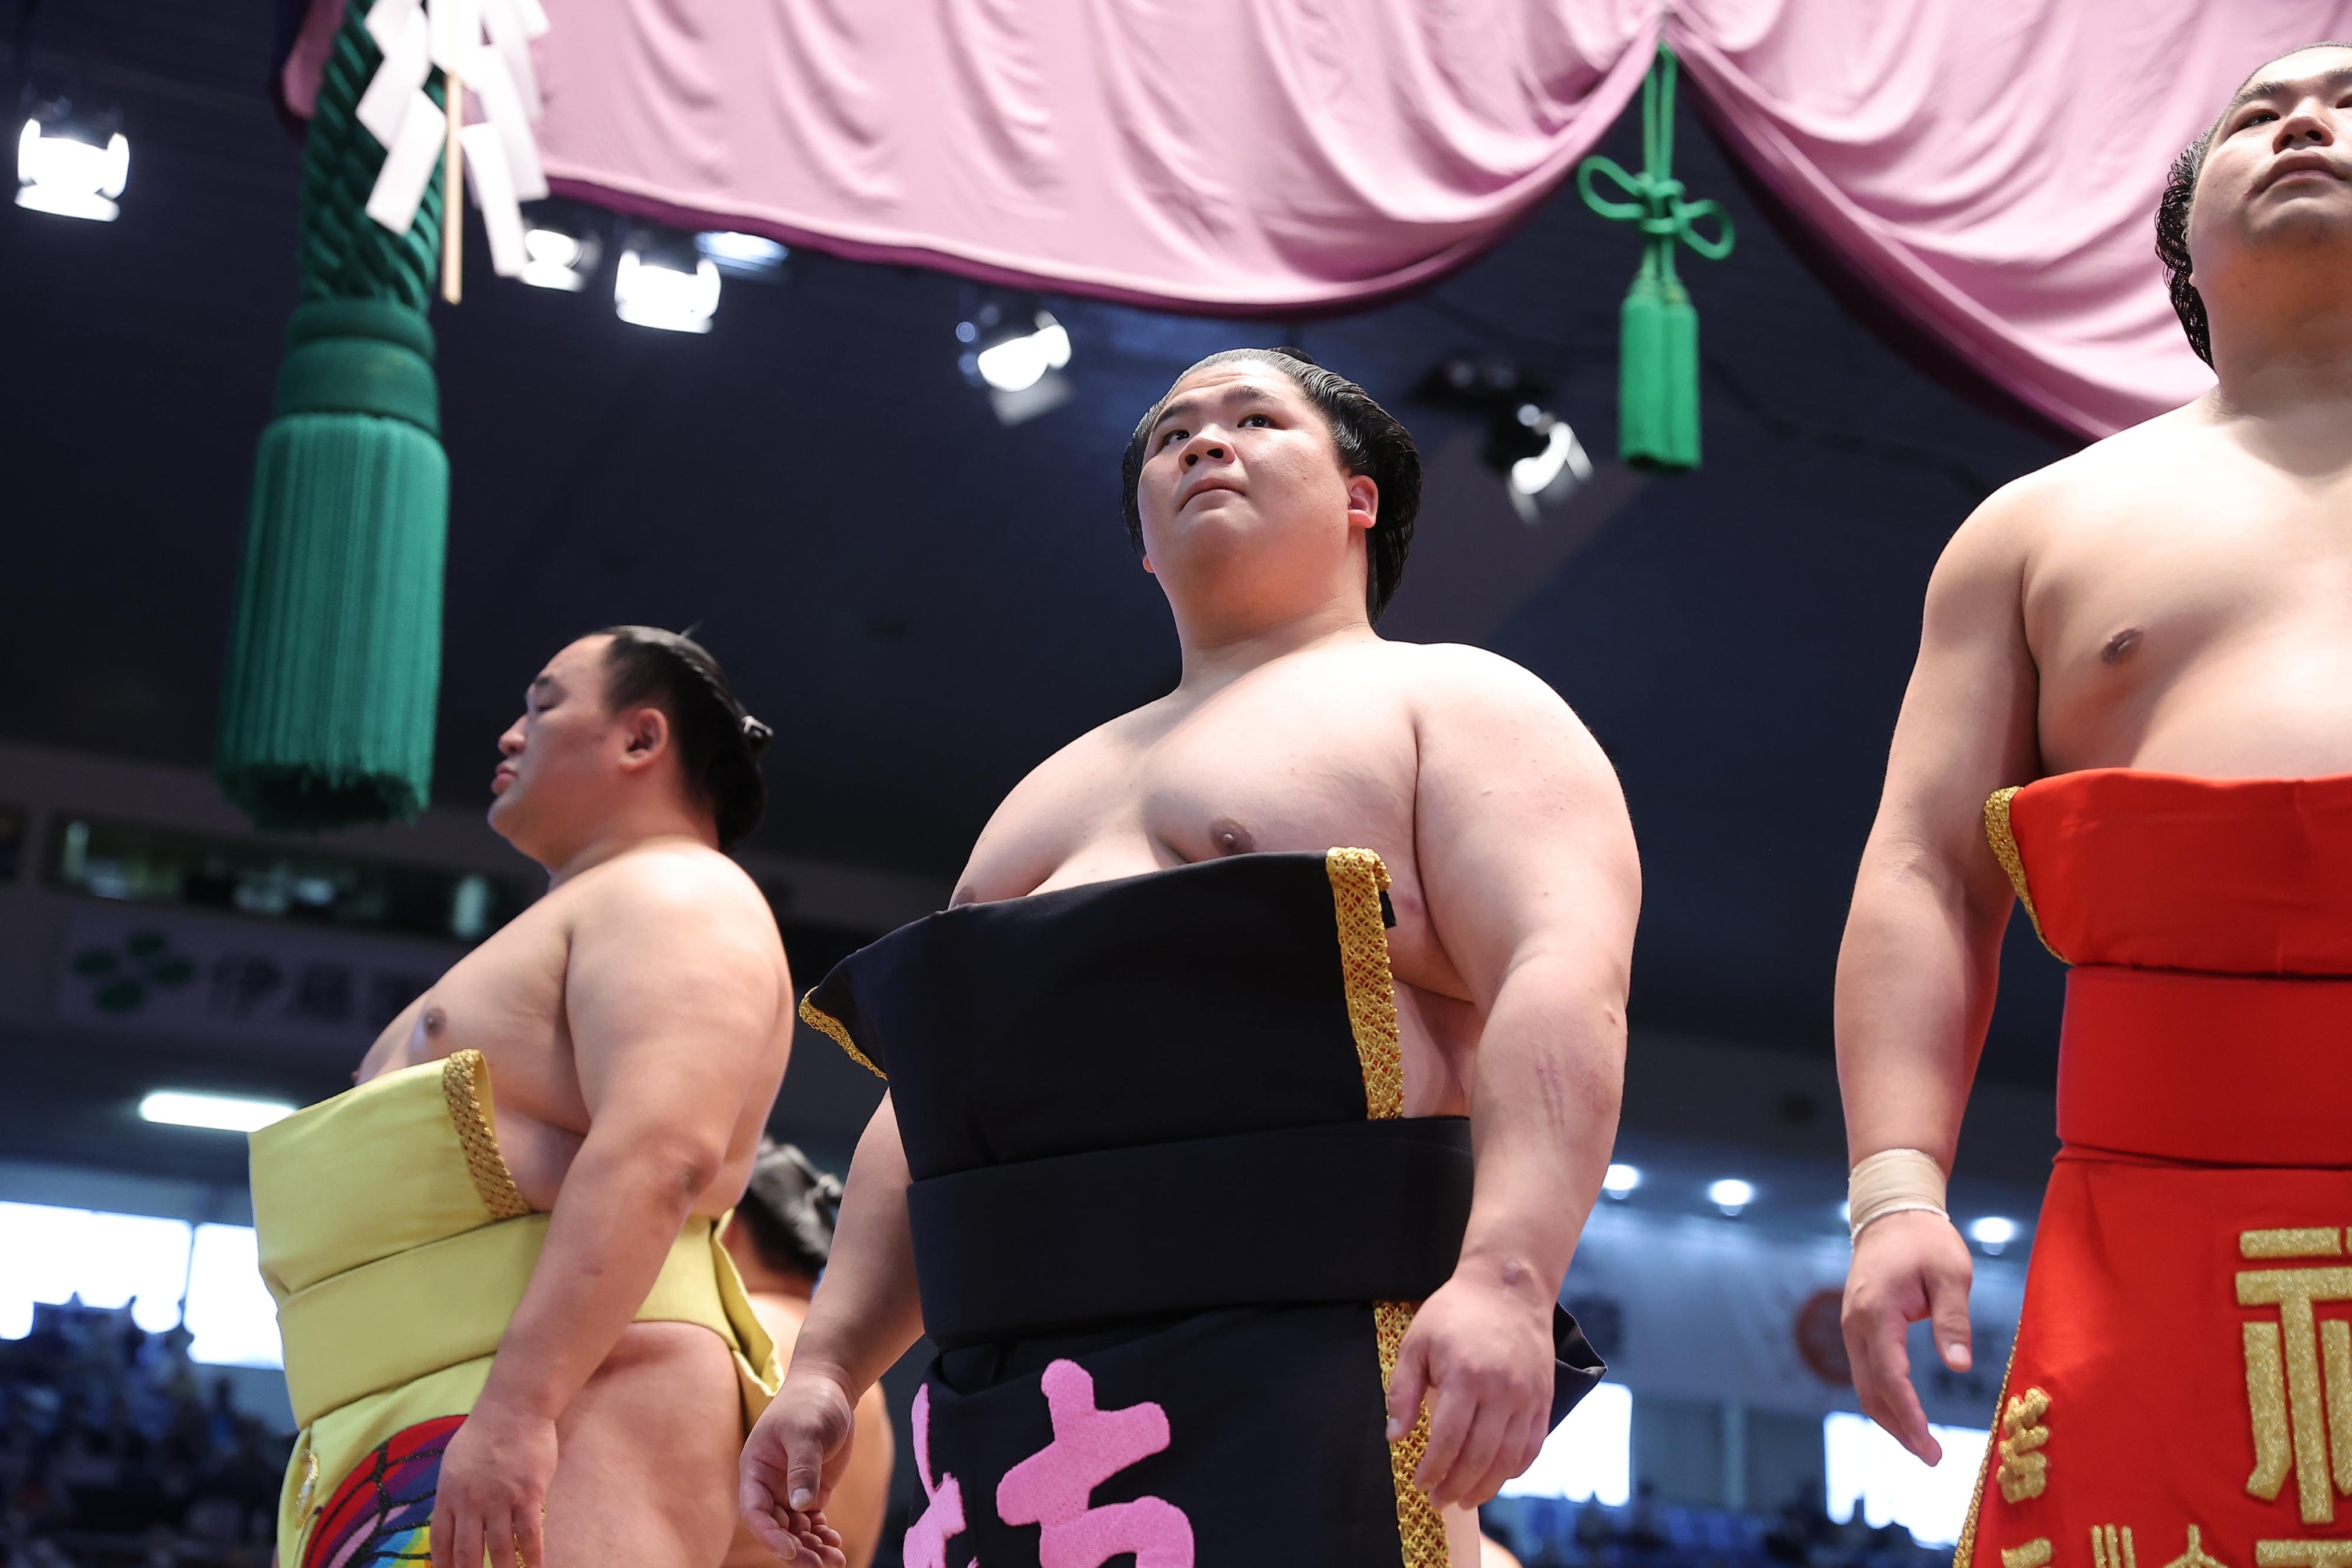 Aichi Enjoy Nagoya Sumo Wrestling On Box Seat And Nagoya Food Dinner